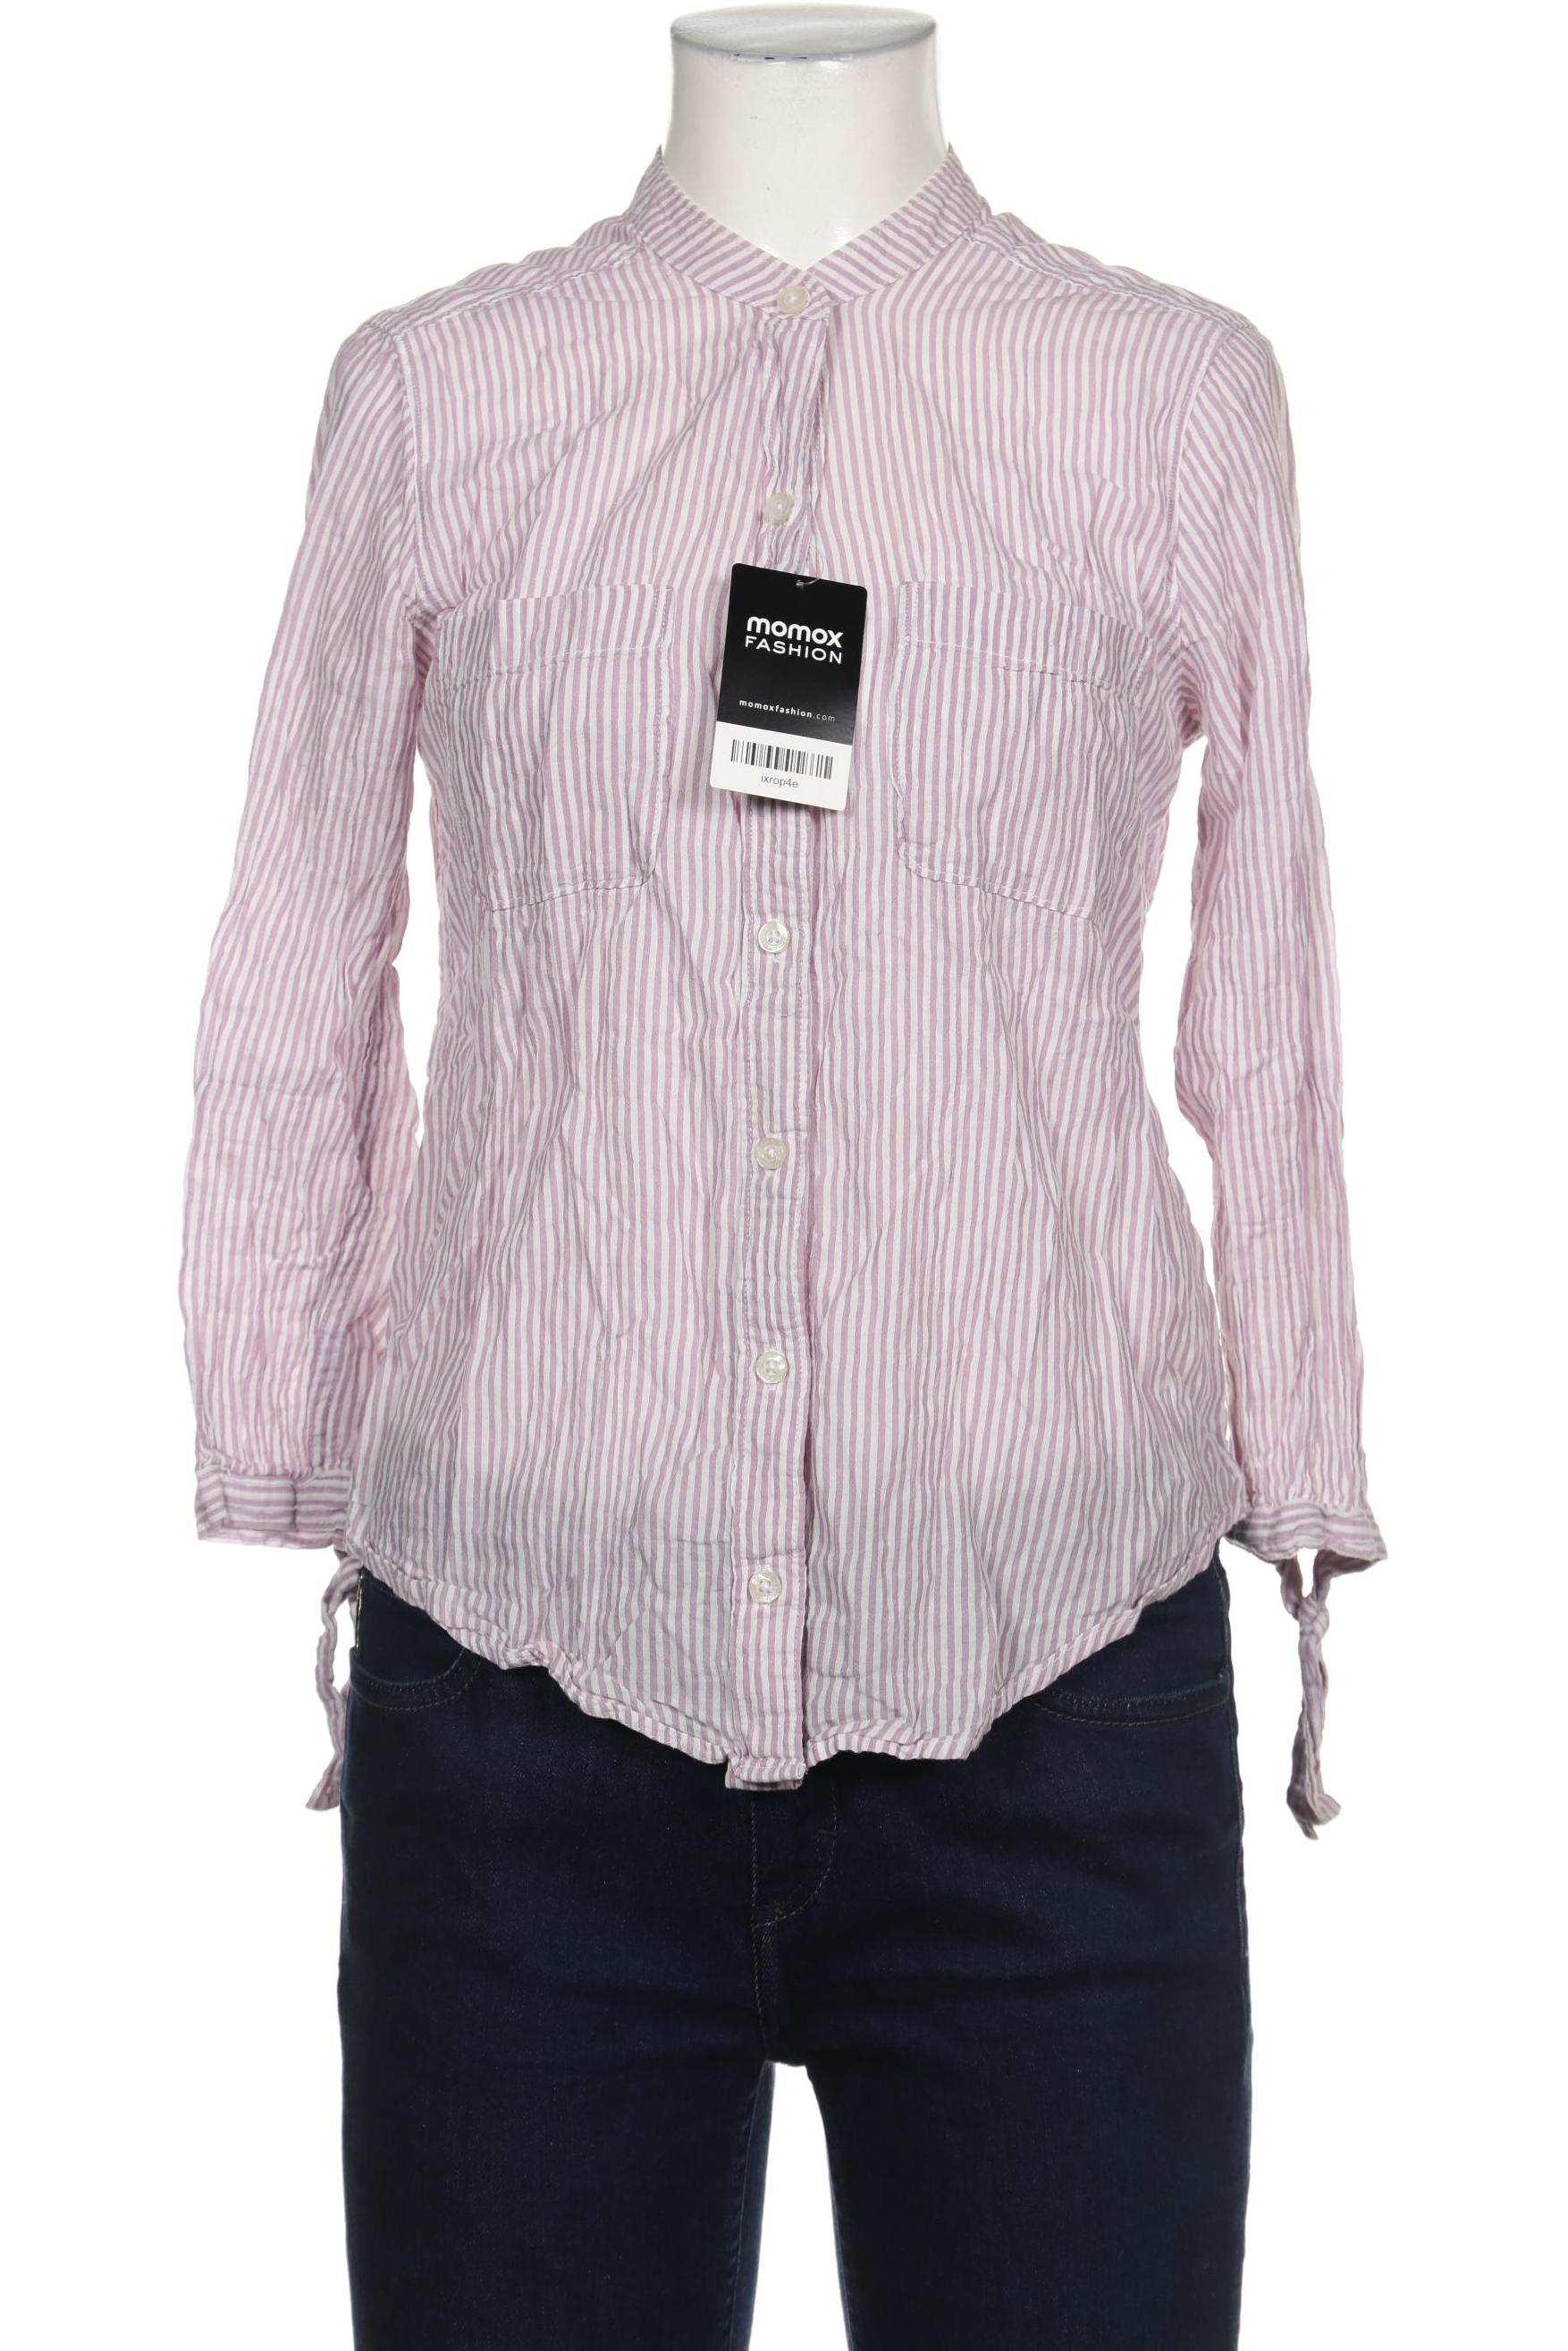 Abercrombie & Fitch Damen Bluse, pink von Abercrombie & Fitch